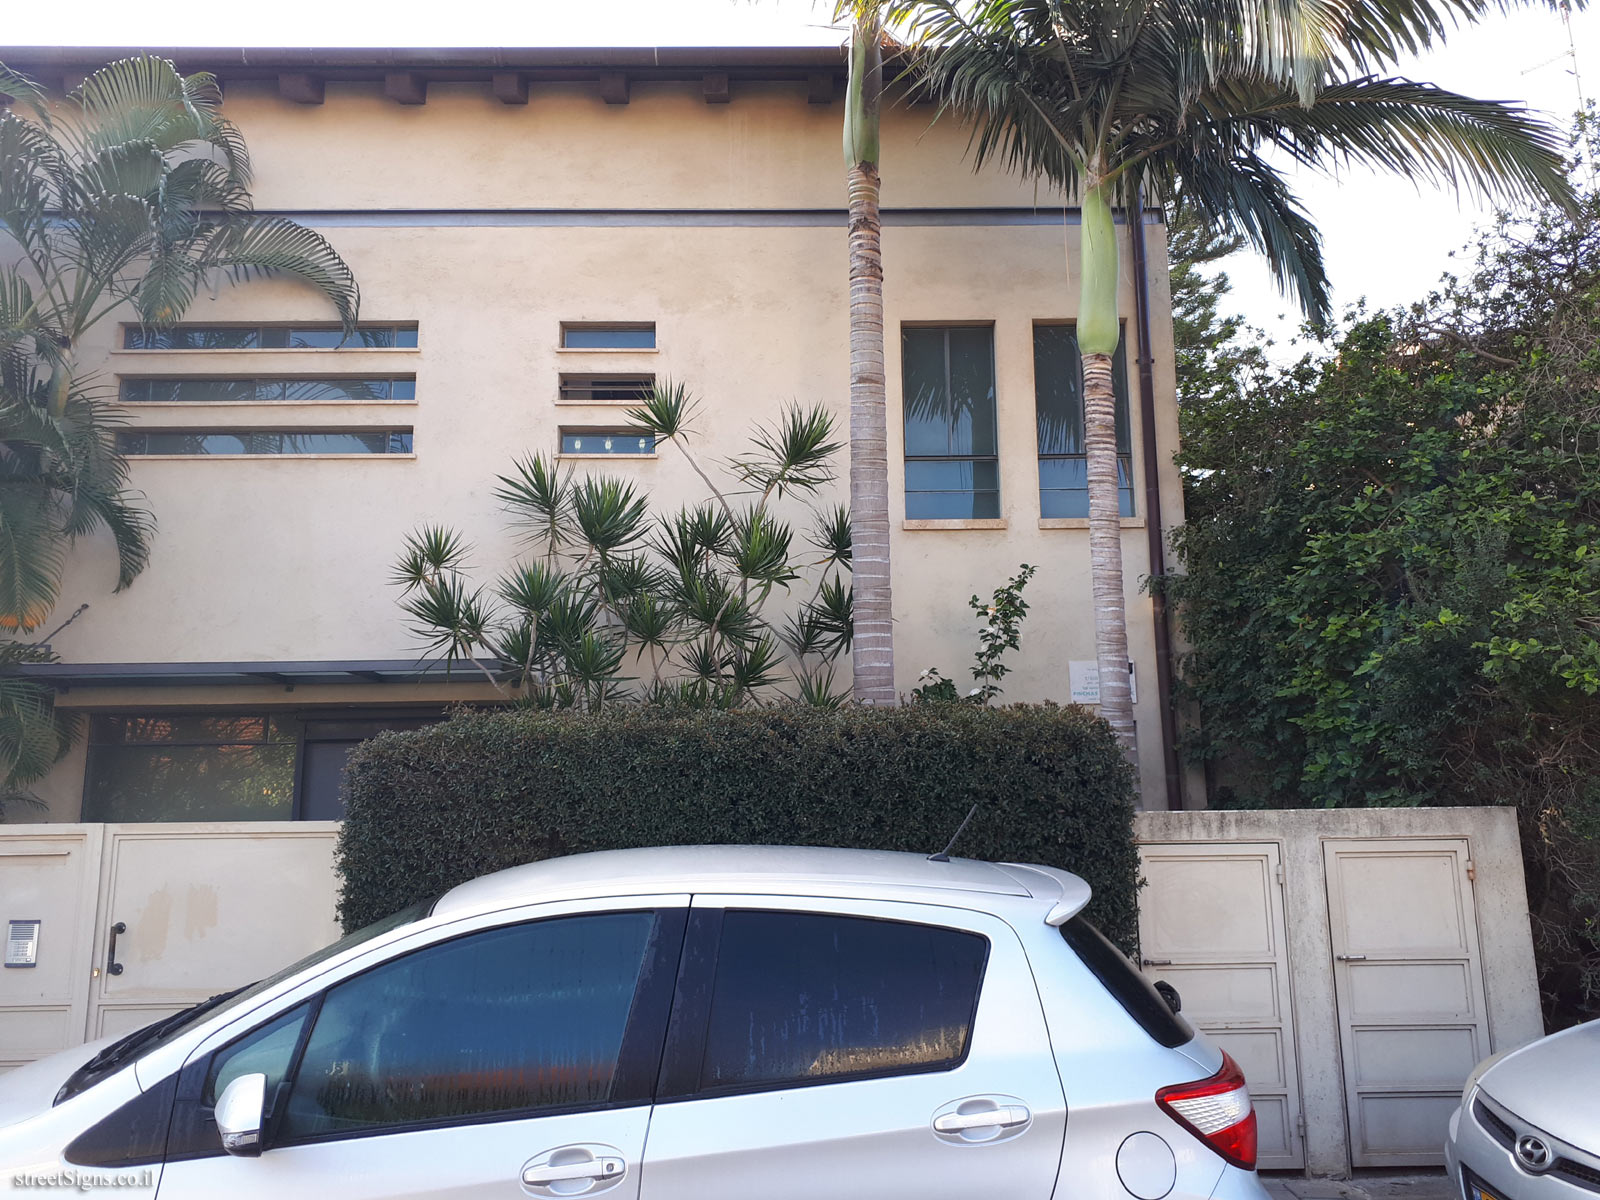 The house of Pinchas Abramovic - Yehuda Karni St 12, Tel Aviv-Yafo, Israel